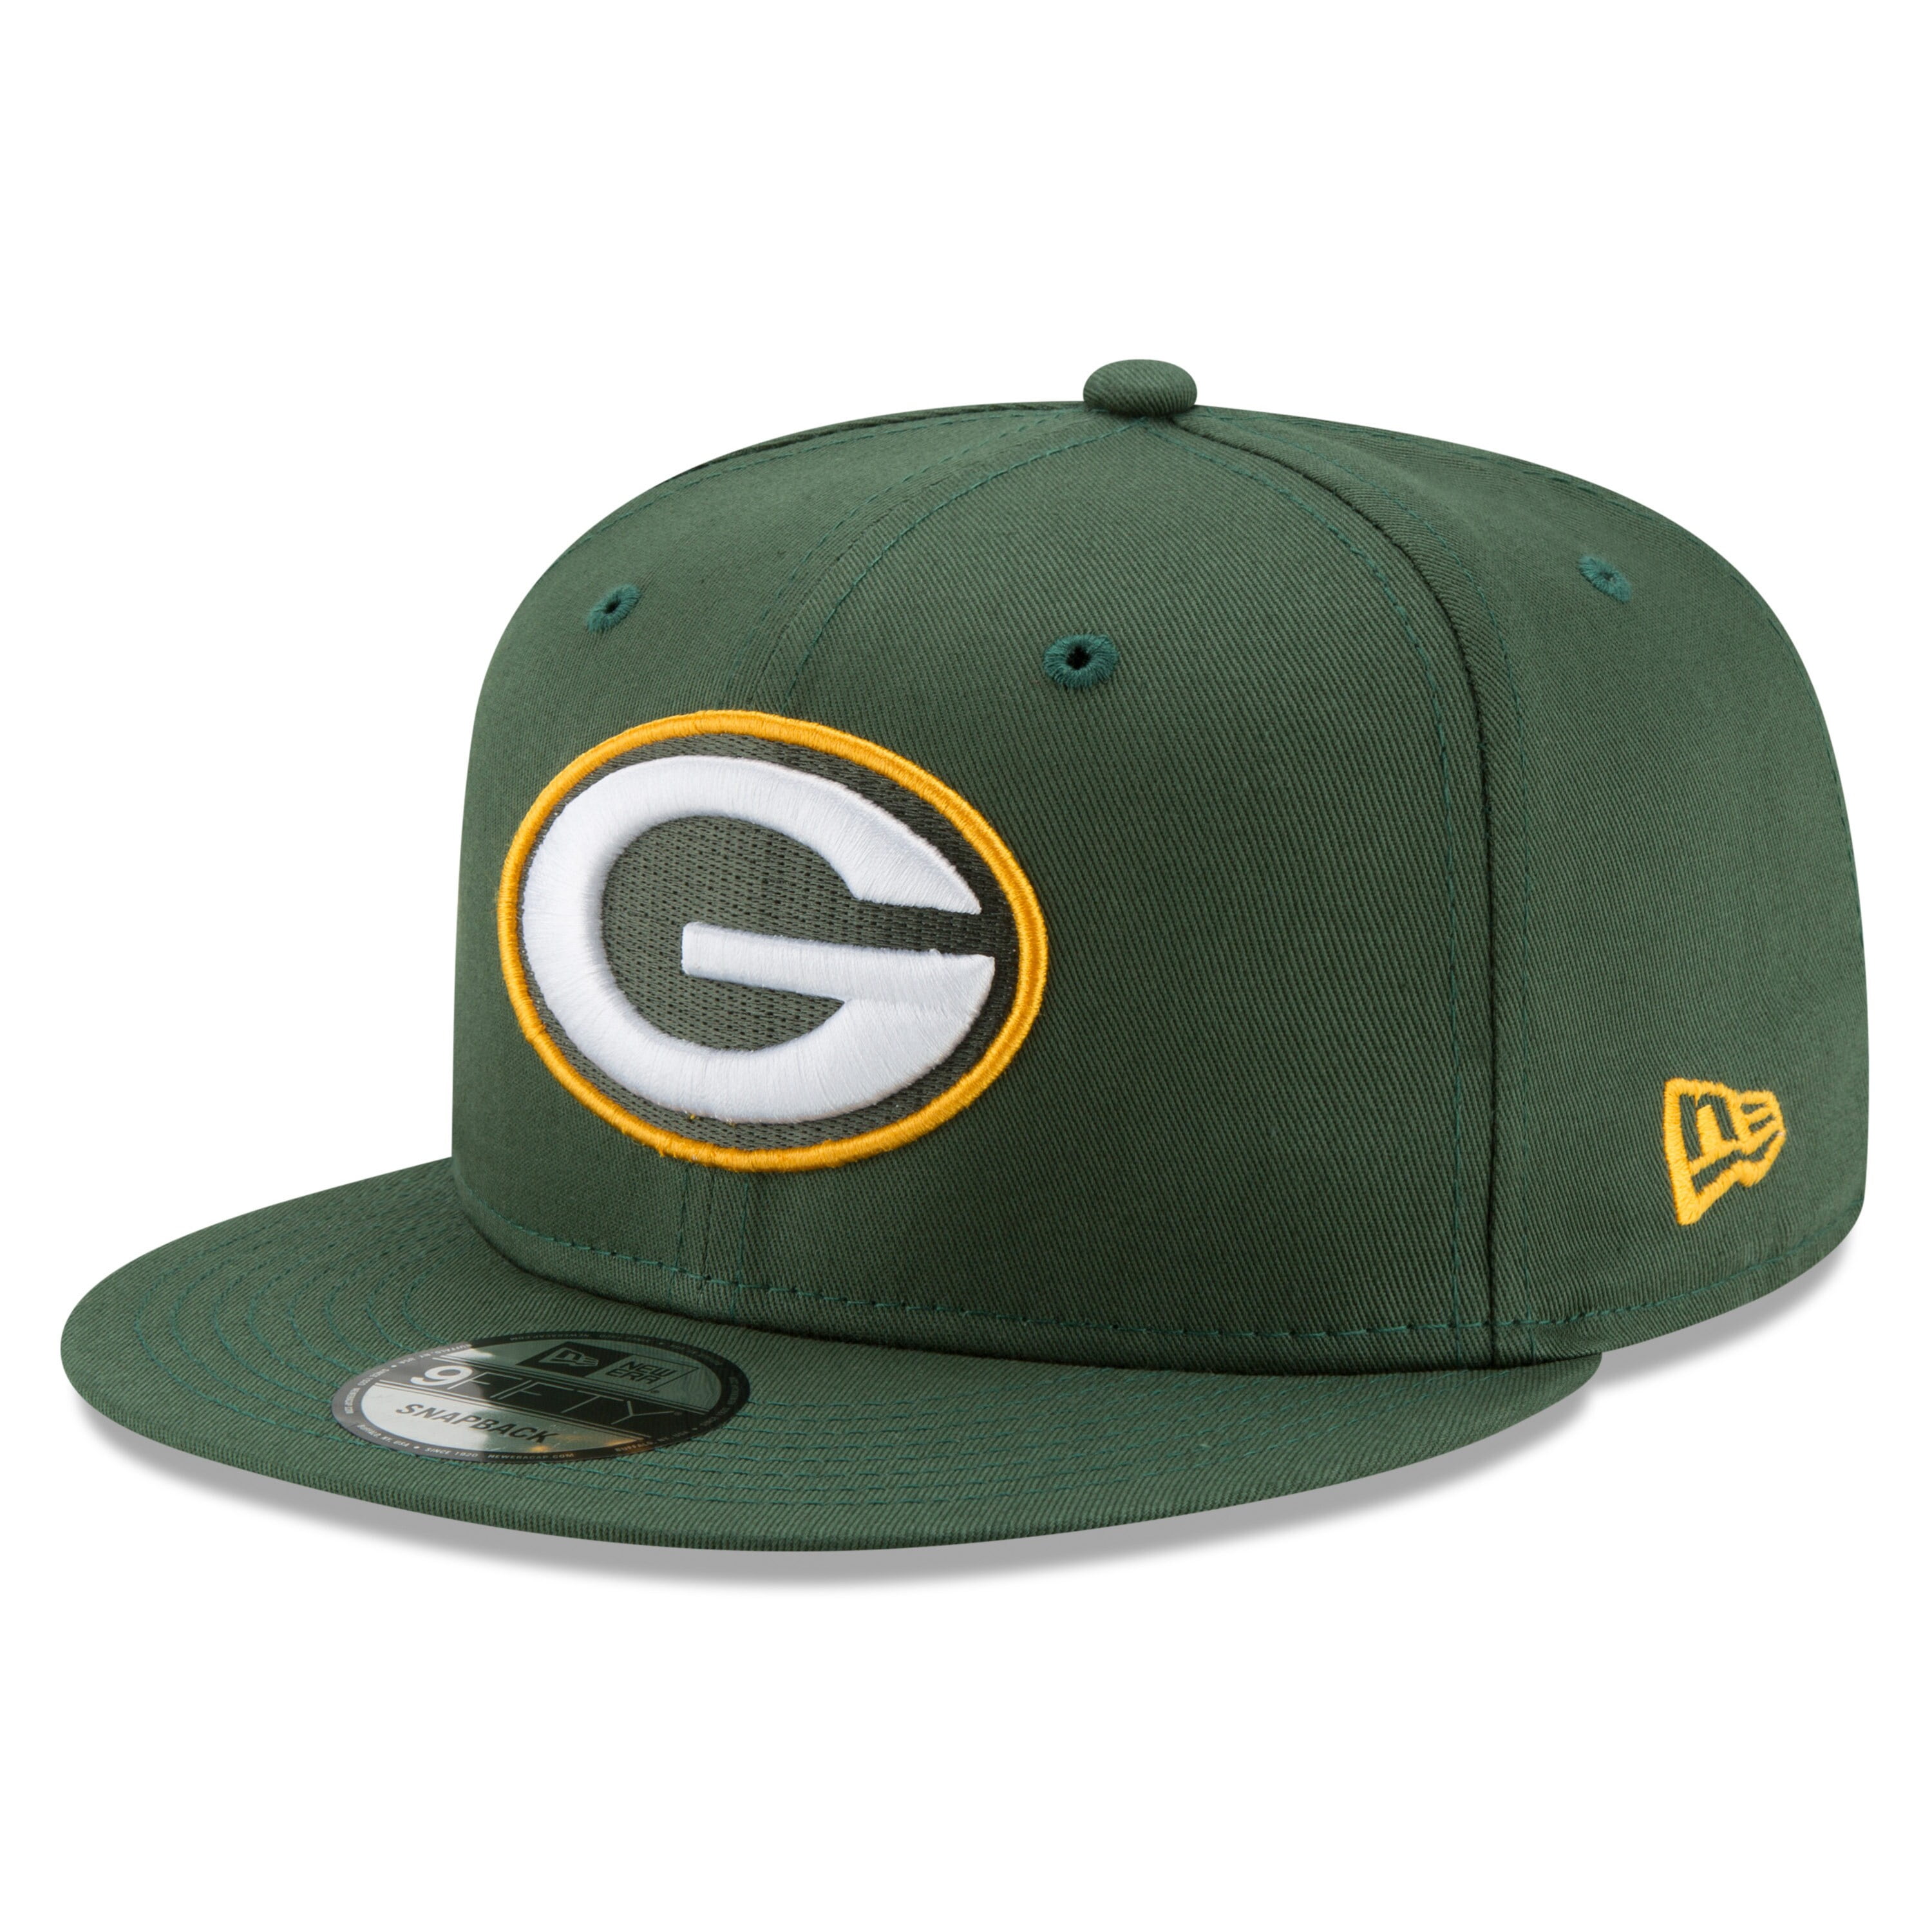 Men's New Era Green Green Bay Packers Basic 9FIFTY Adjustable Snapback Hat -